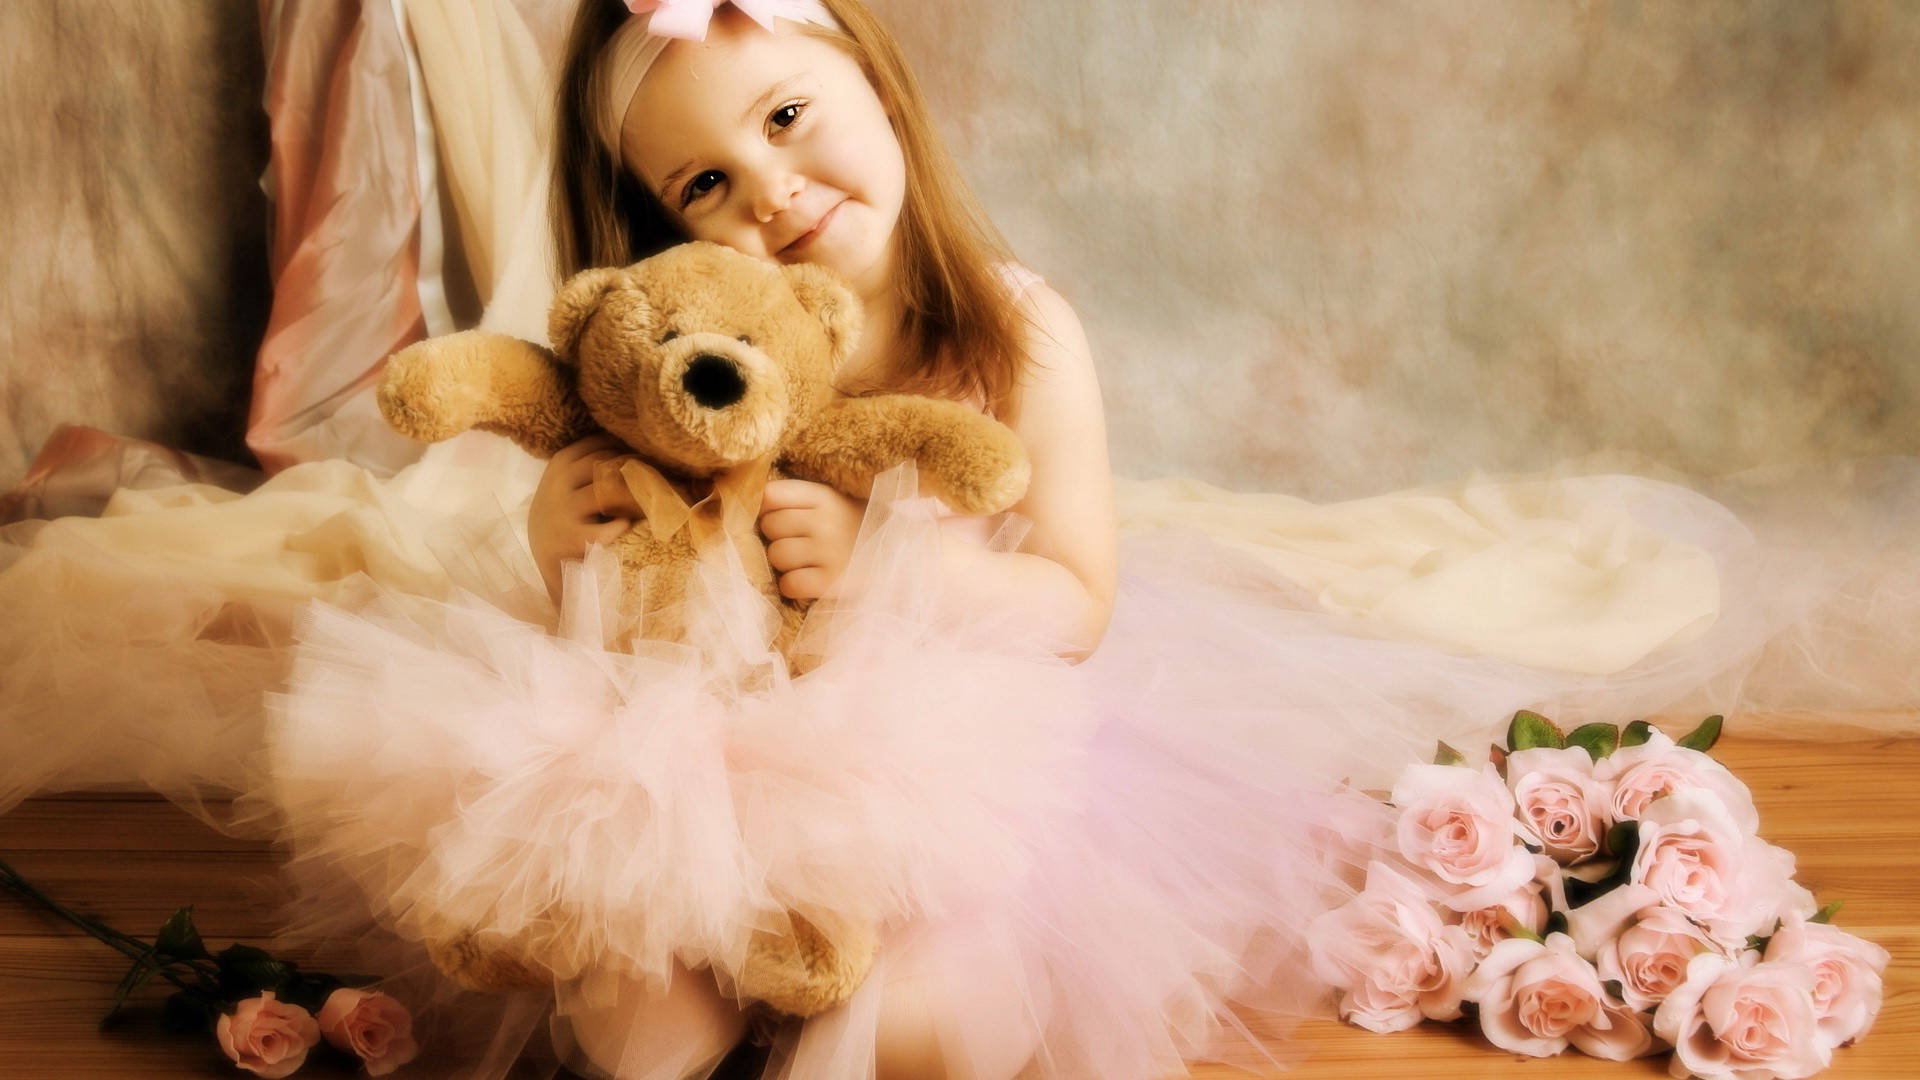 Cute Flower Girl With Teddy Bear Wallpaper